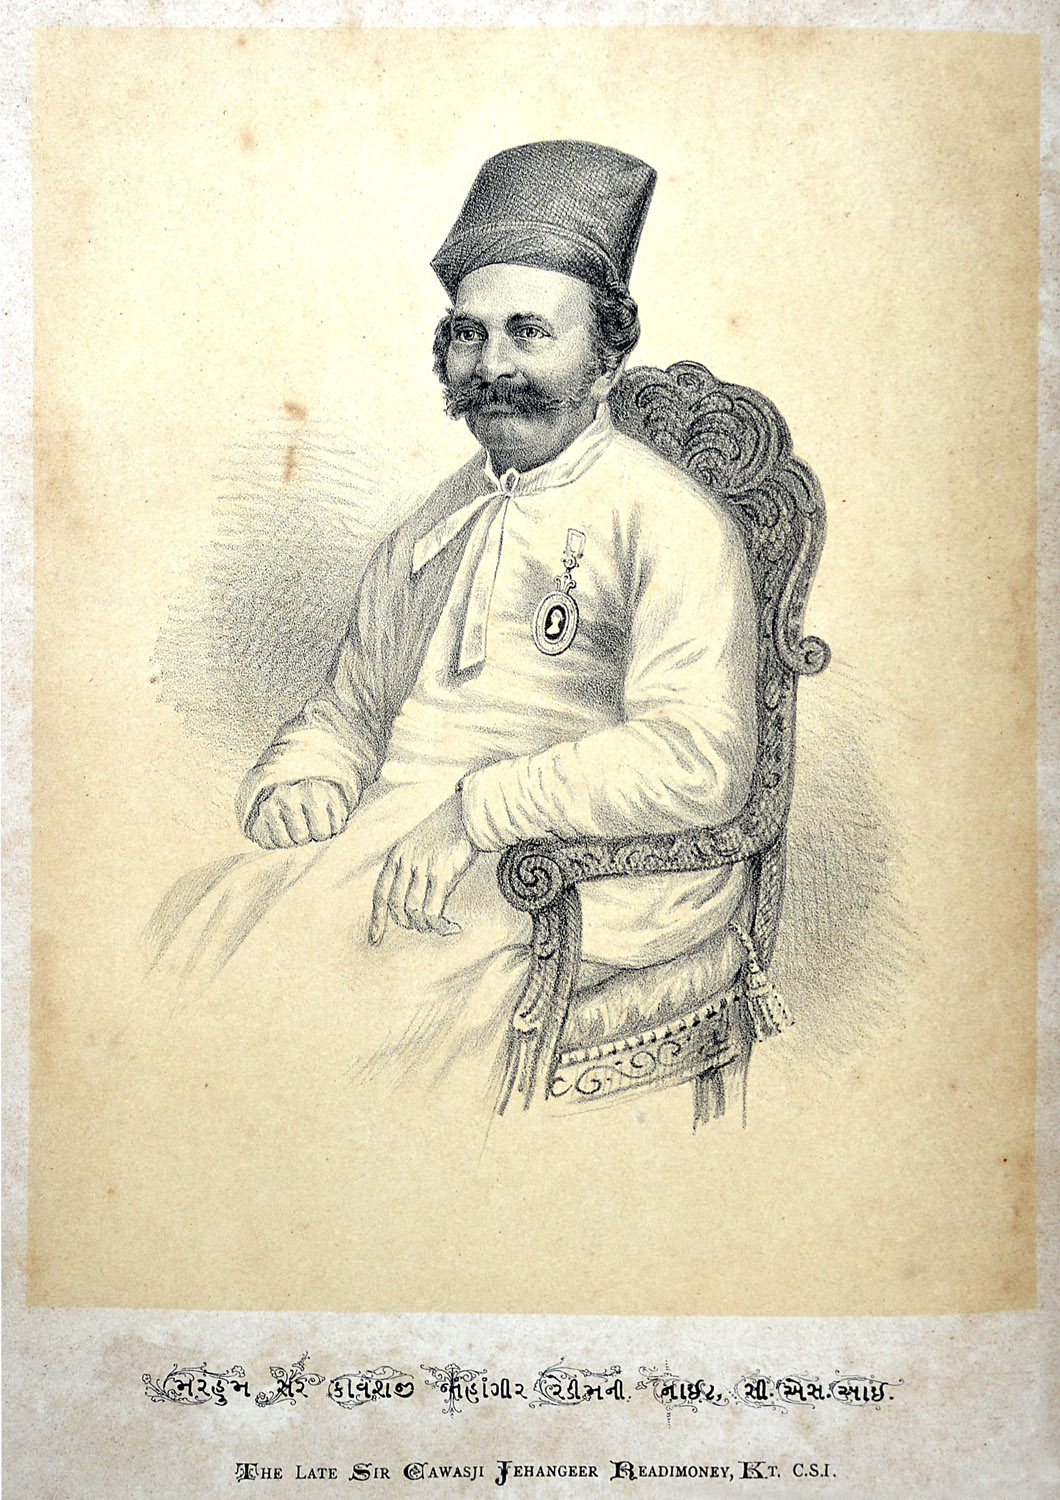 Sir Cowasjee Jehangir